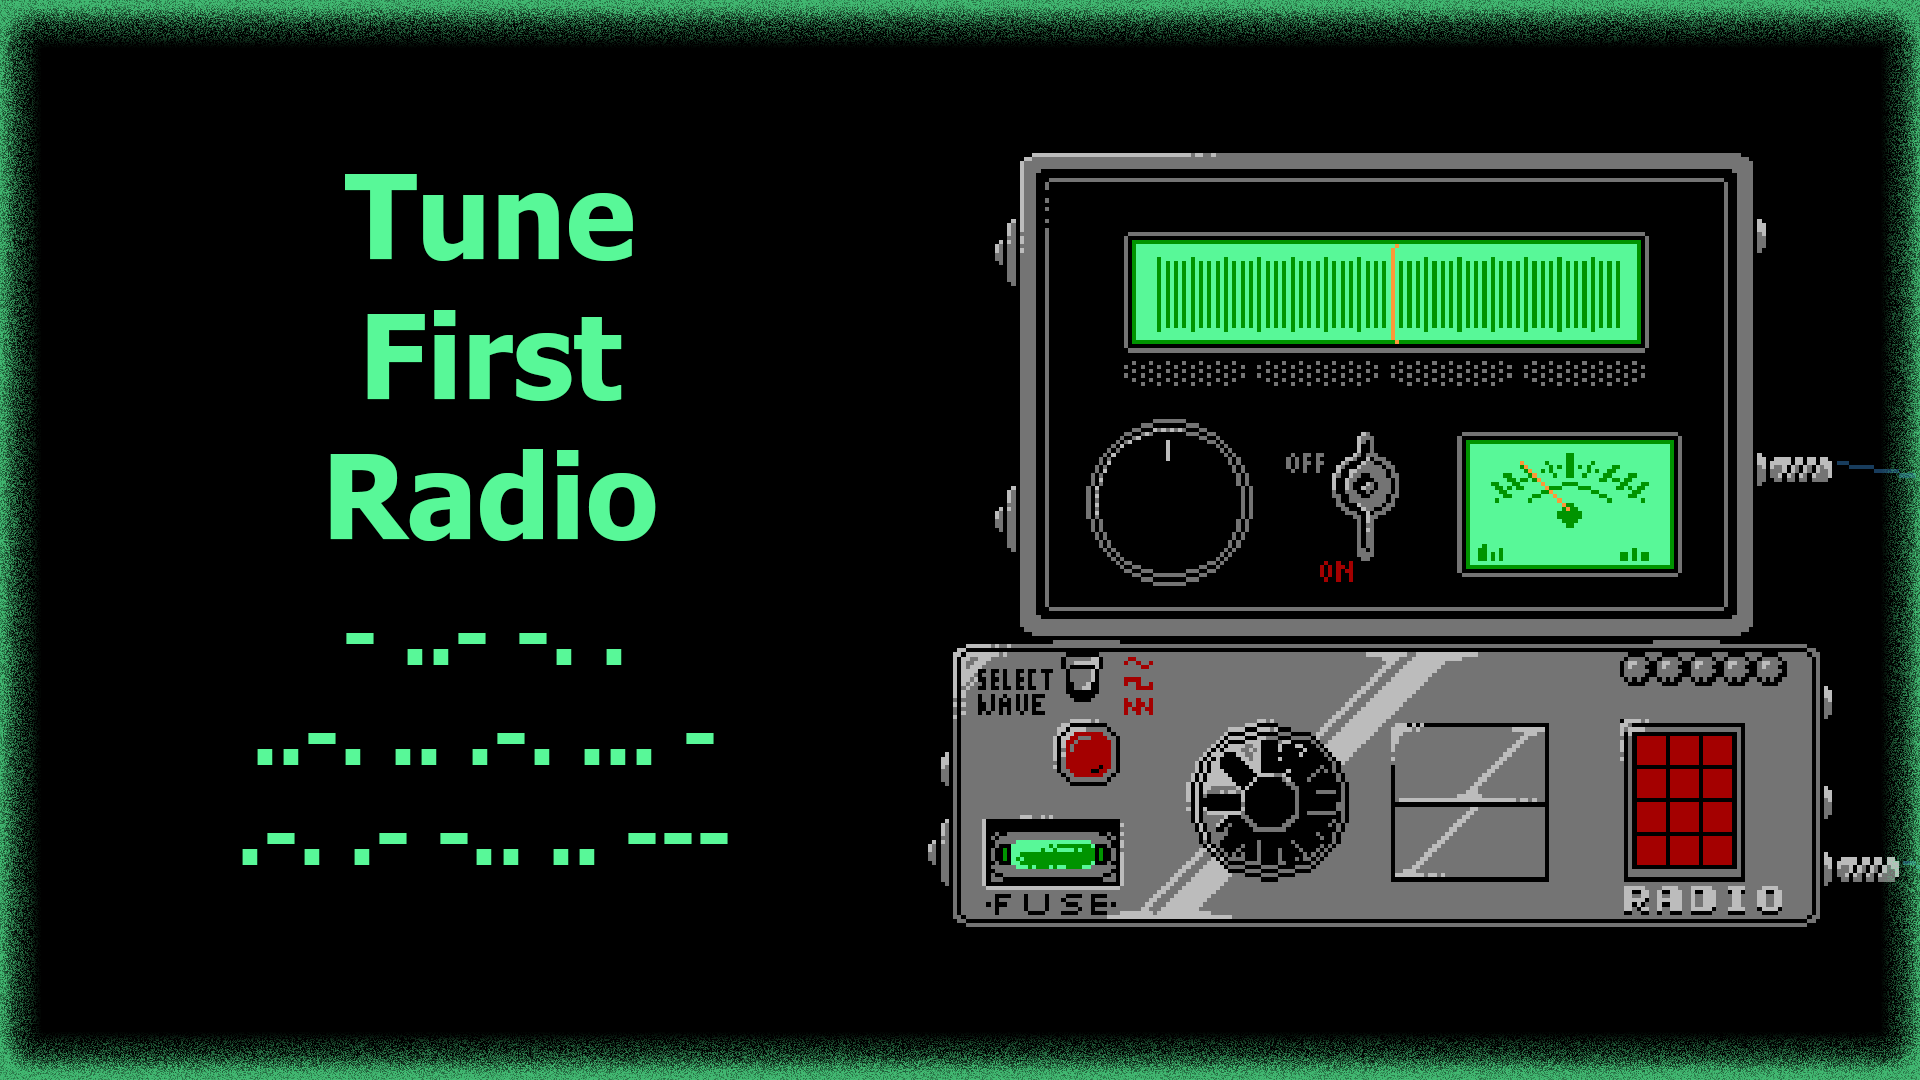 Tune First Radio